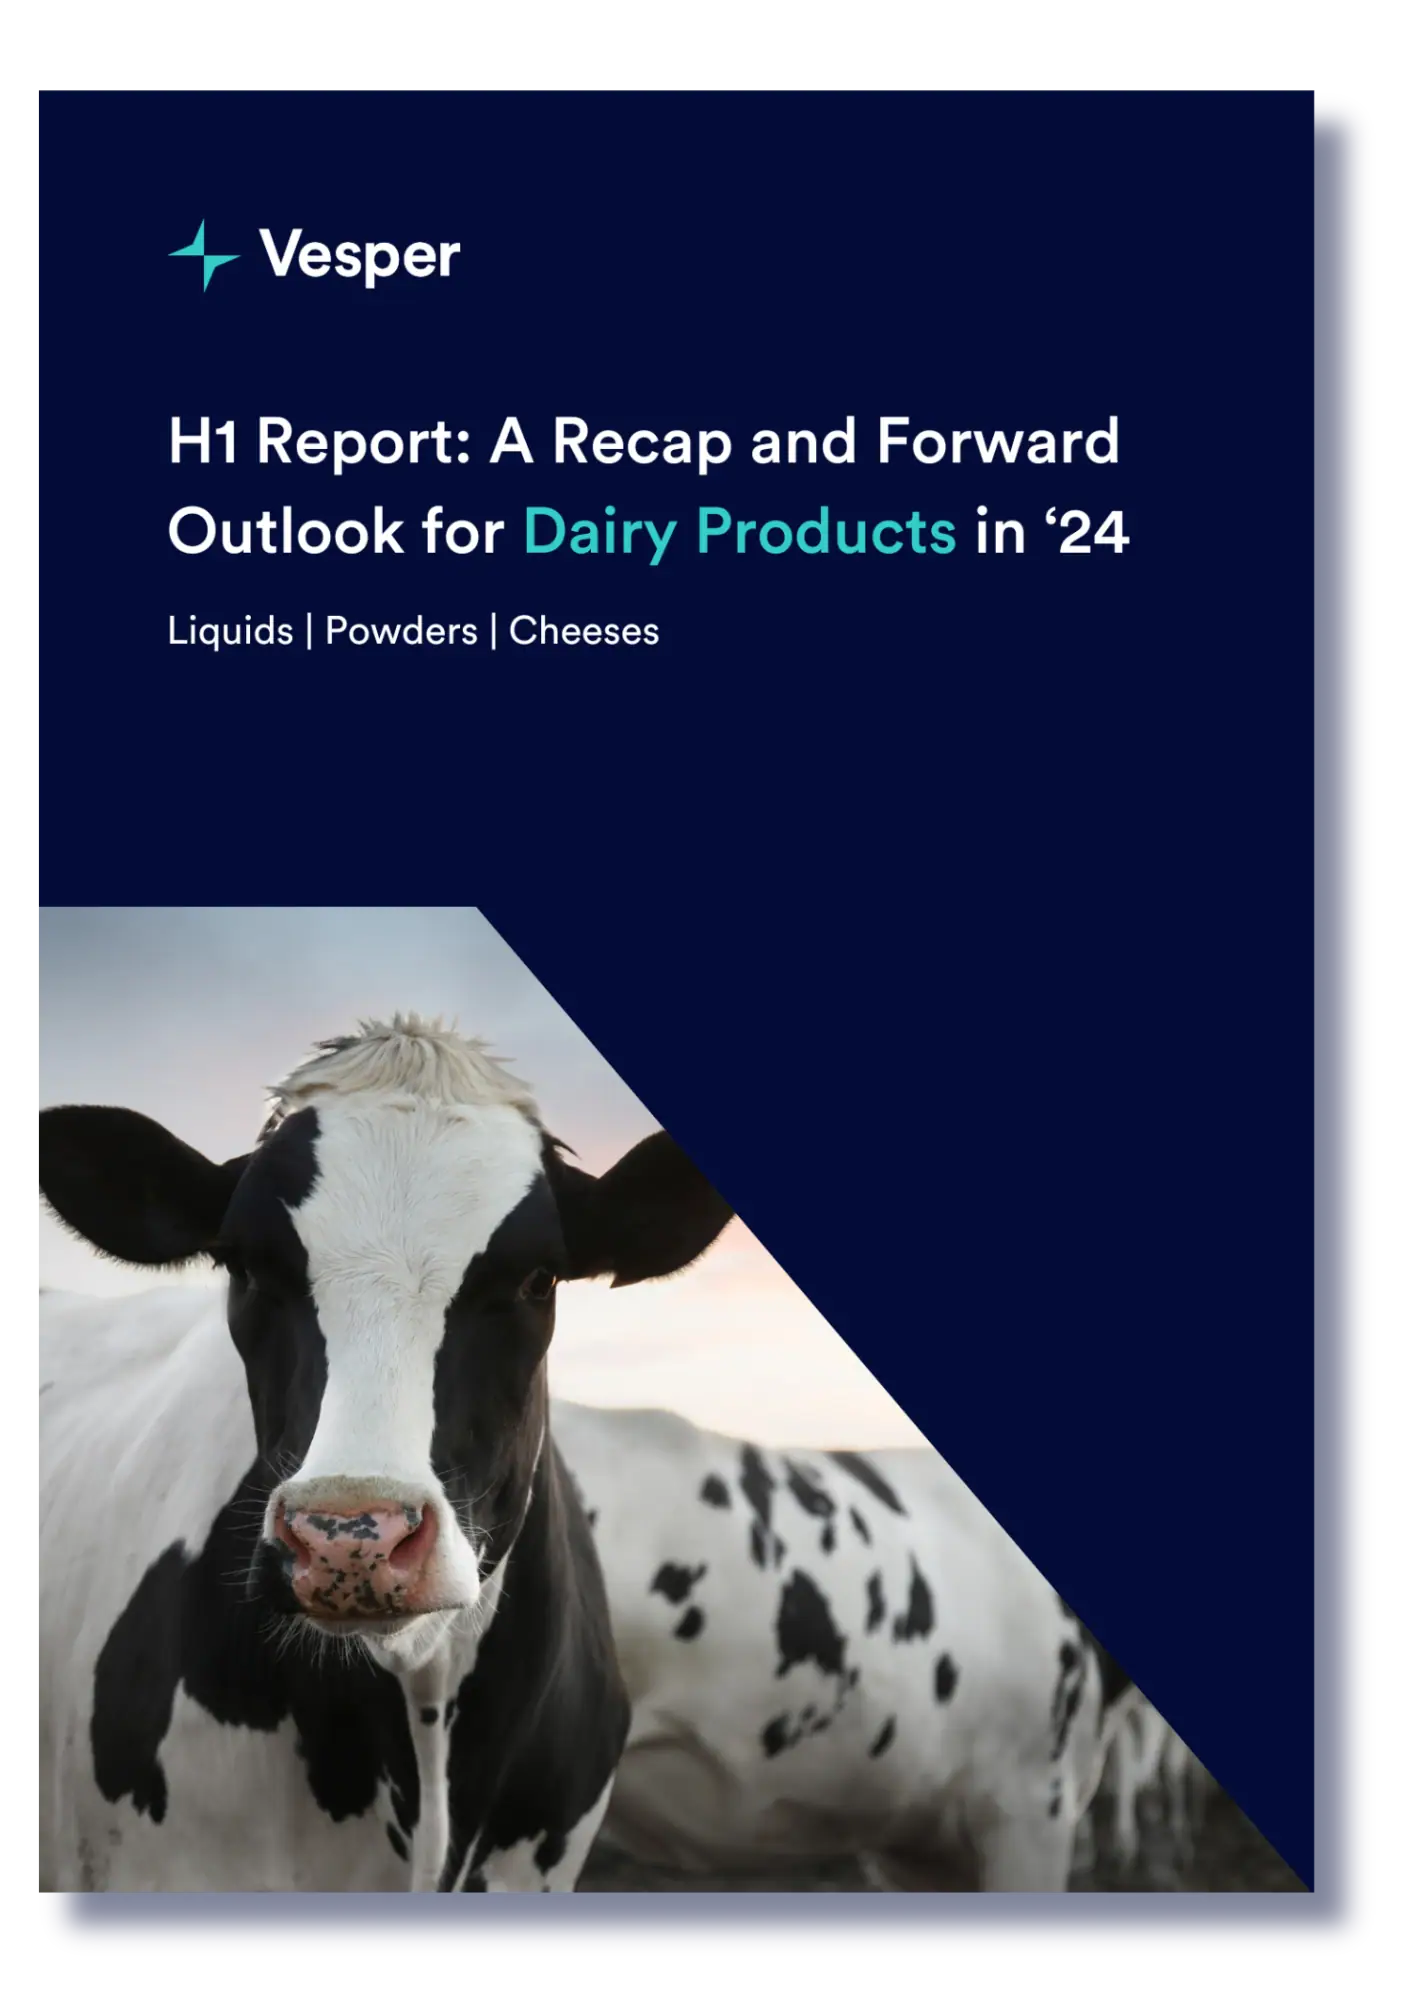 Vesper H1 Report: Dairy cover